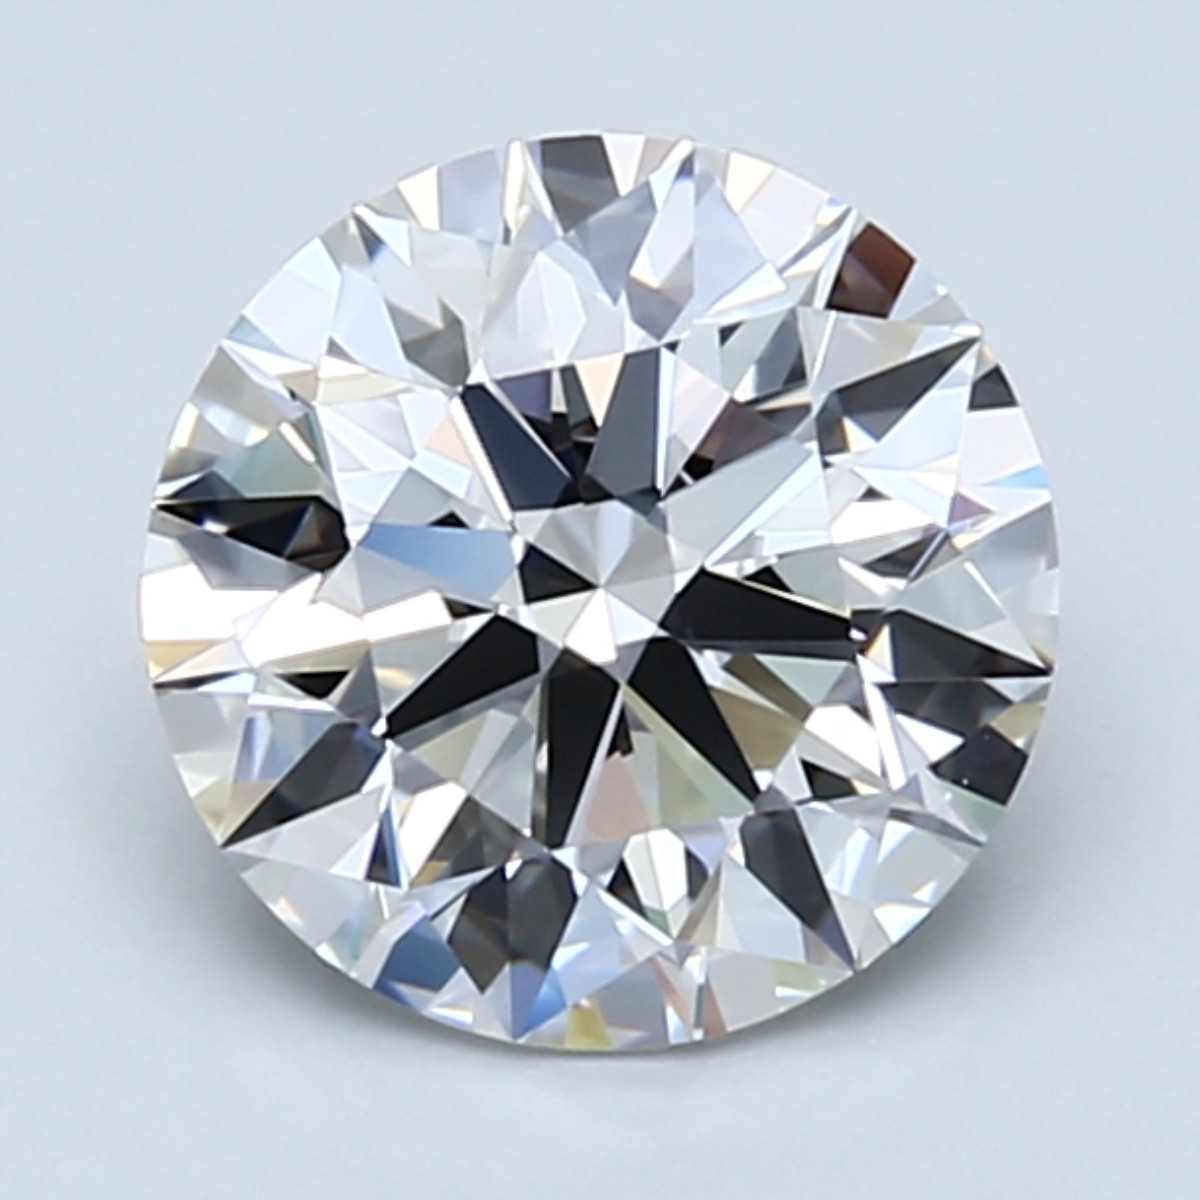 VVS1 clarity diamond